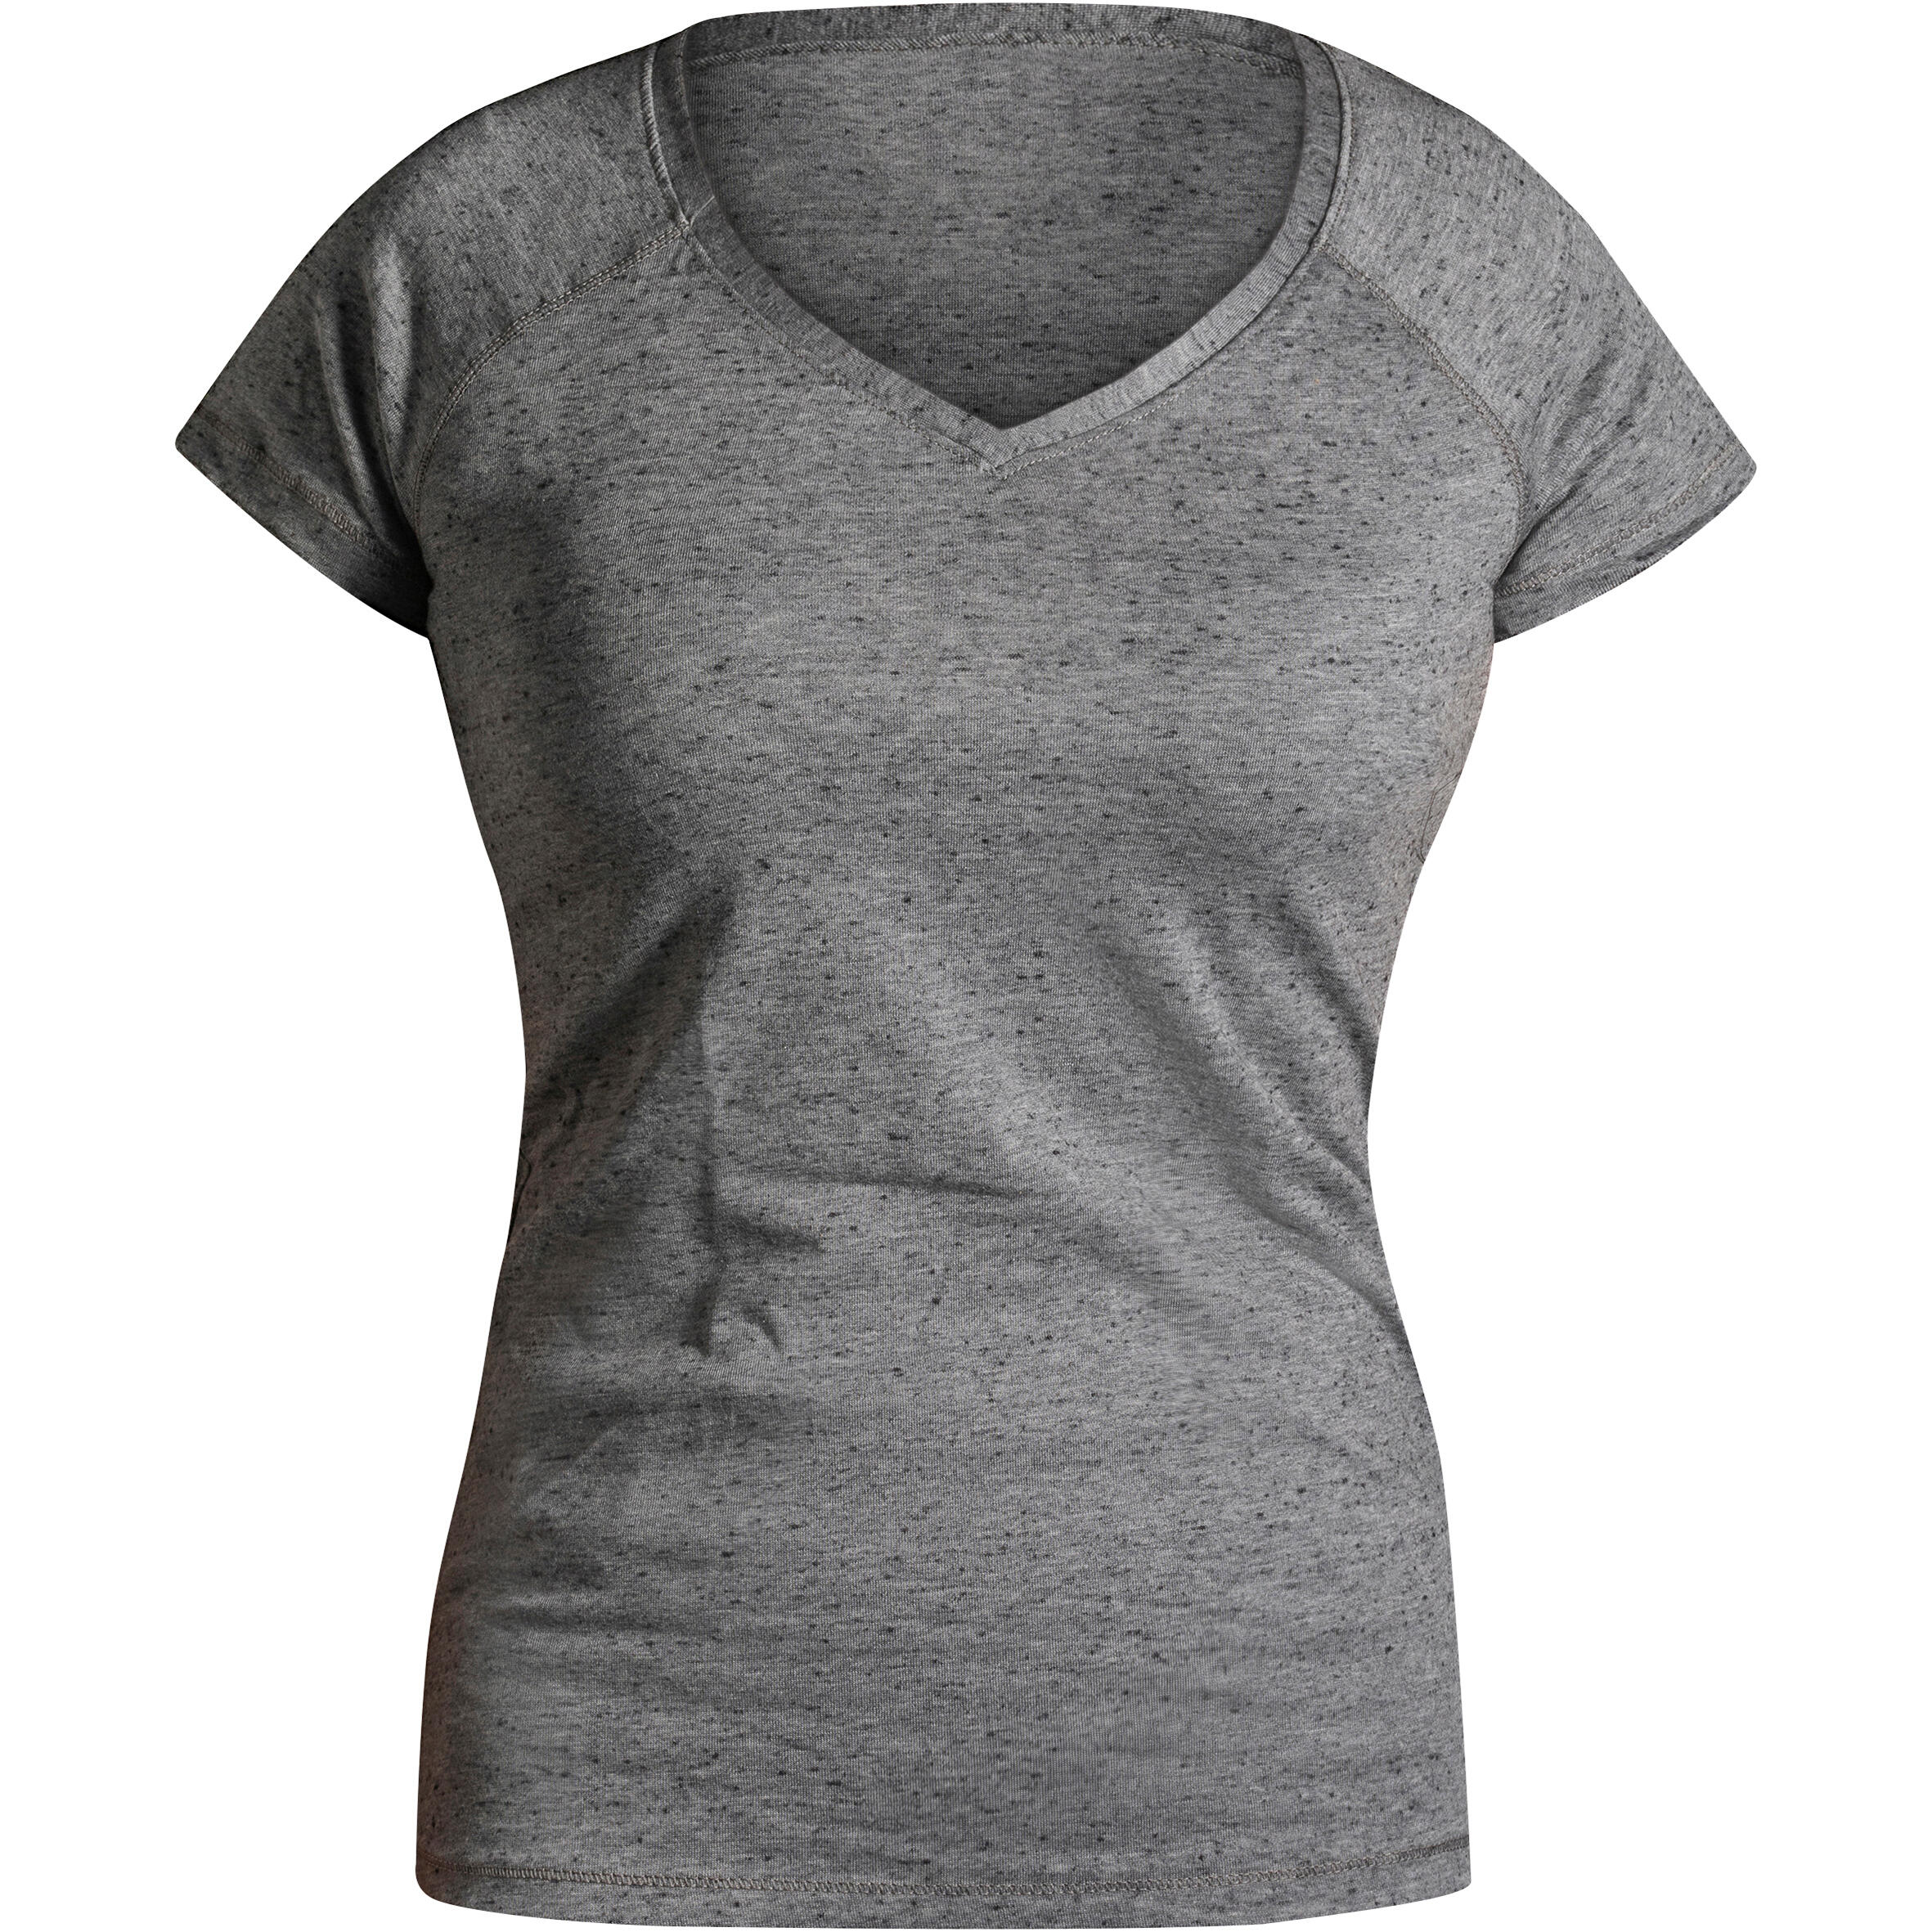 Women's Fitness V-Neck T-Shirt 500 - Grey 7/17